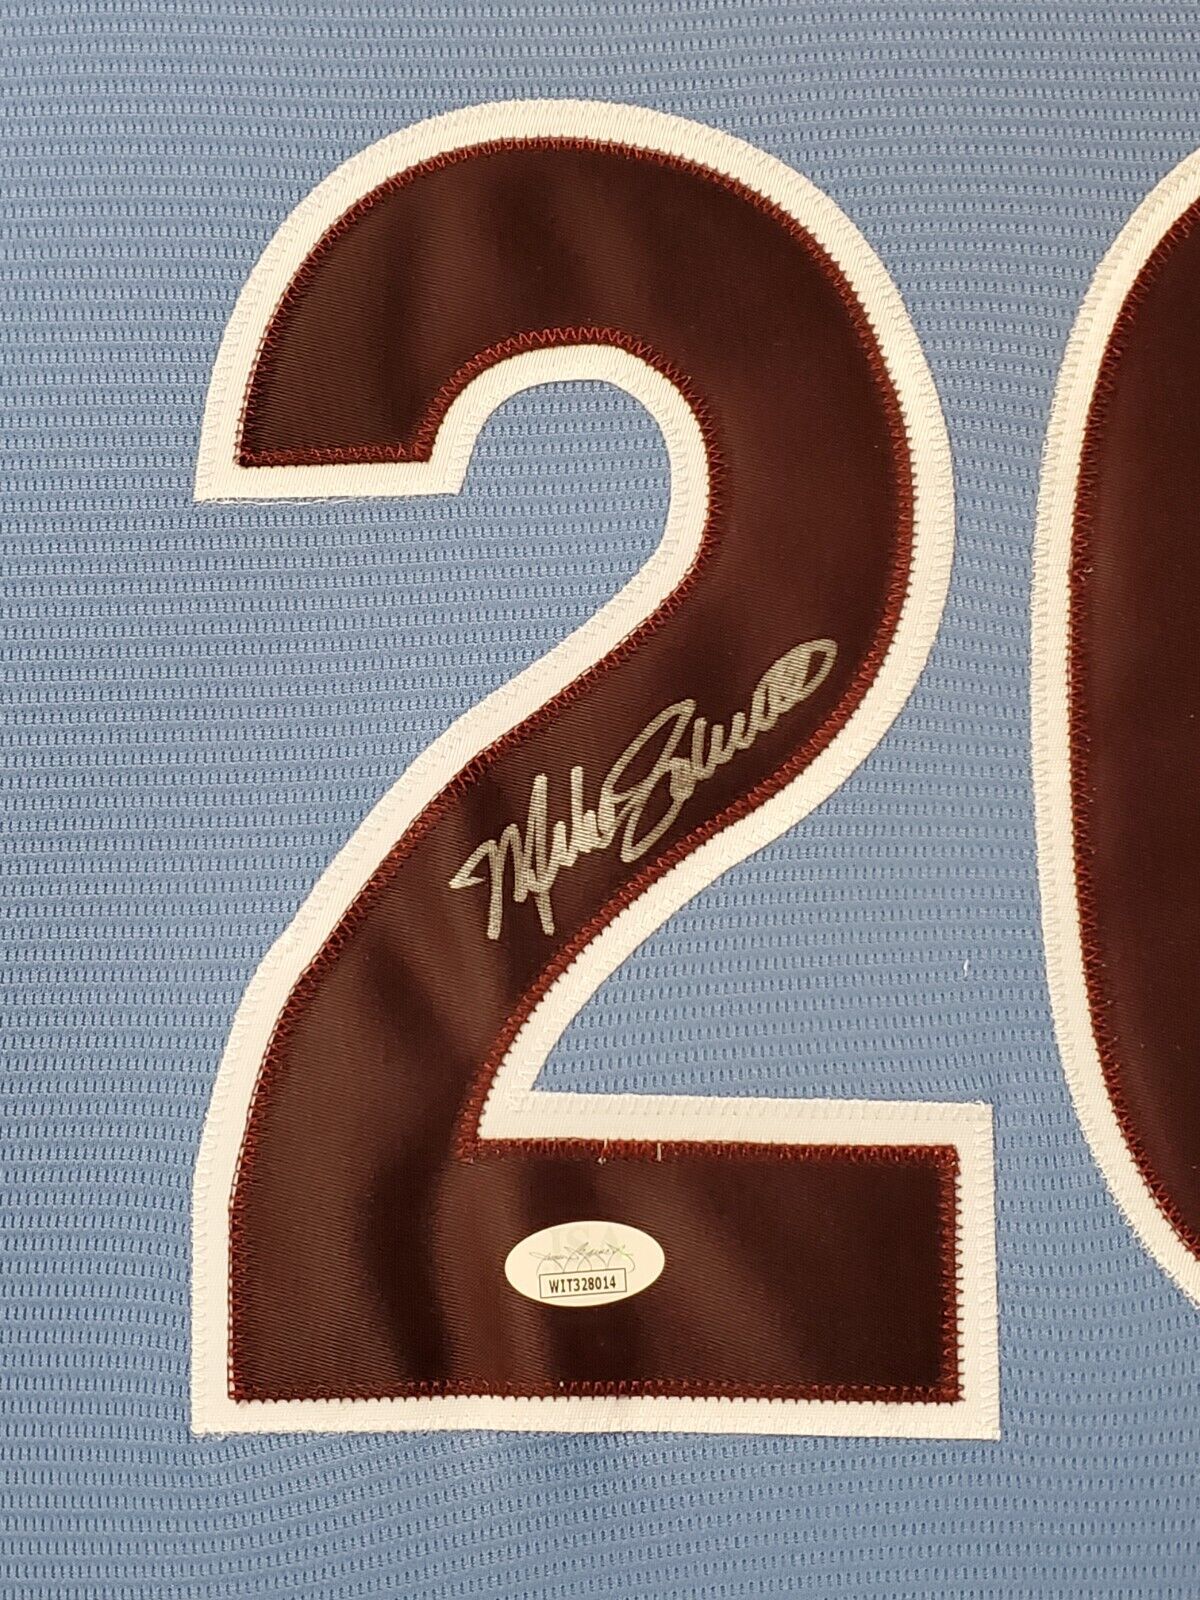 MVP Authentics Framed Philadelphia Phillies Mike Schmidt Autographed Signed Jersey Jsa Coa 719.10 sports jersey framing , jersey framing